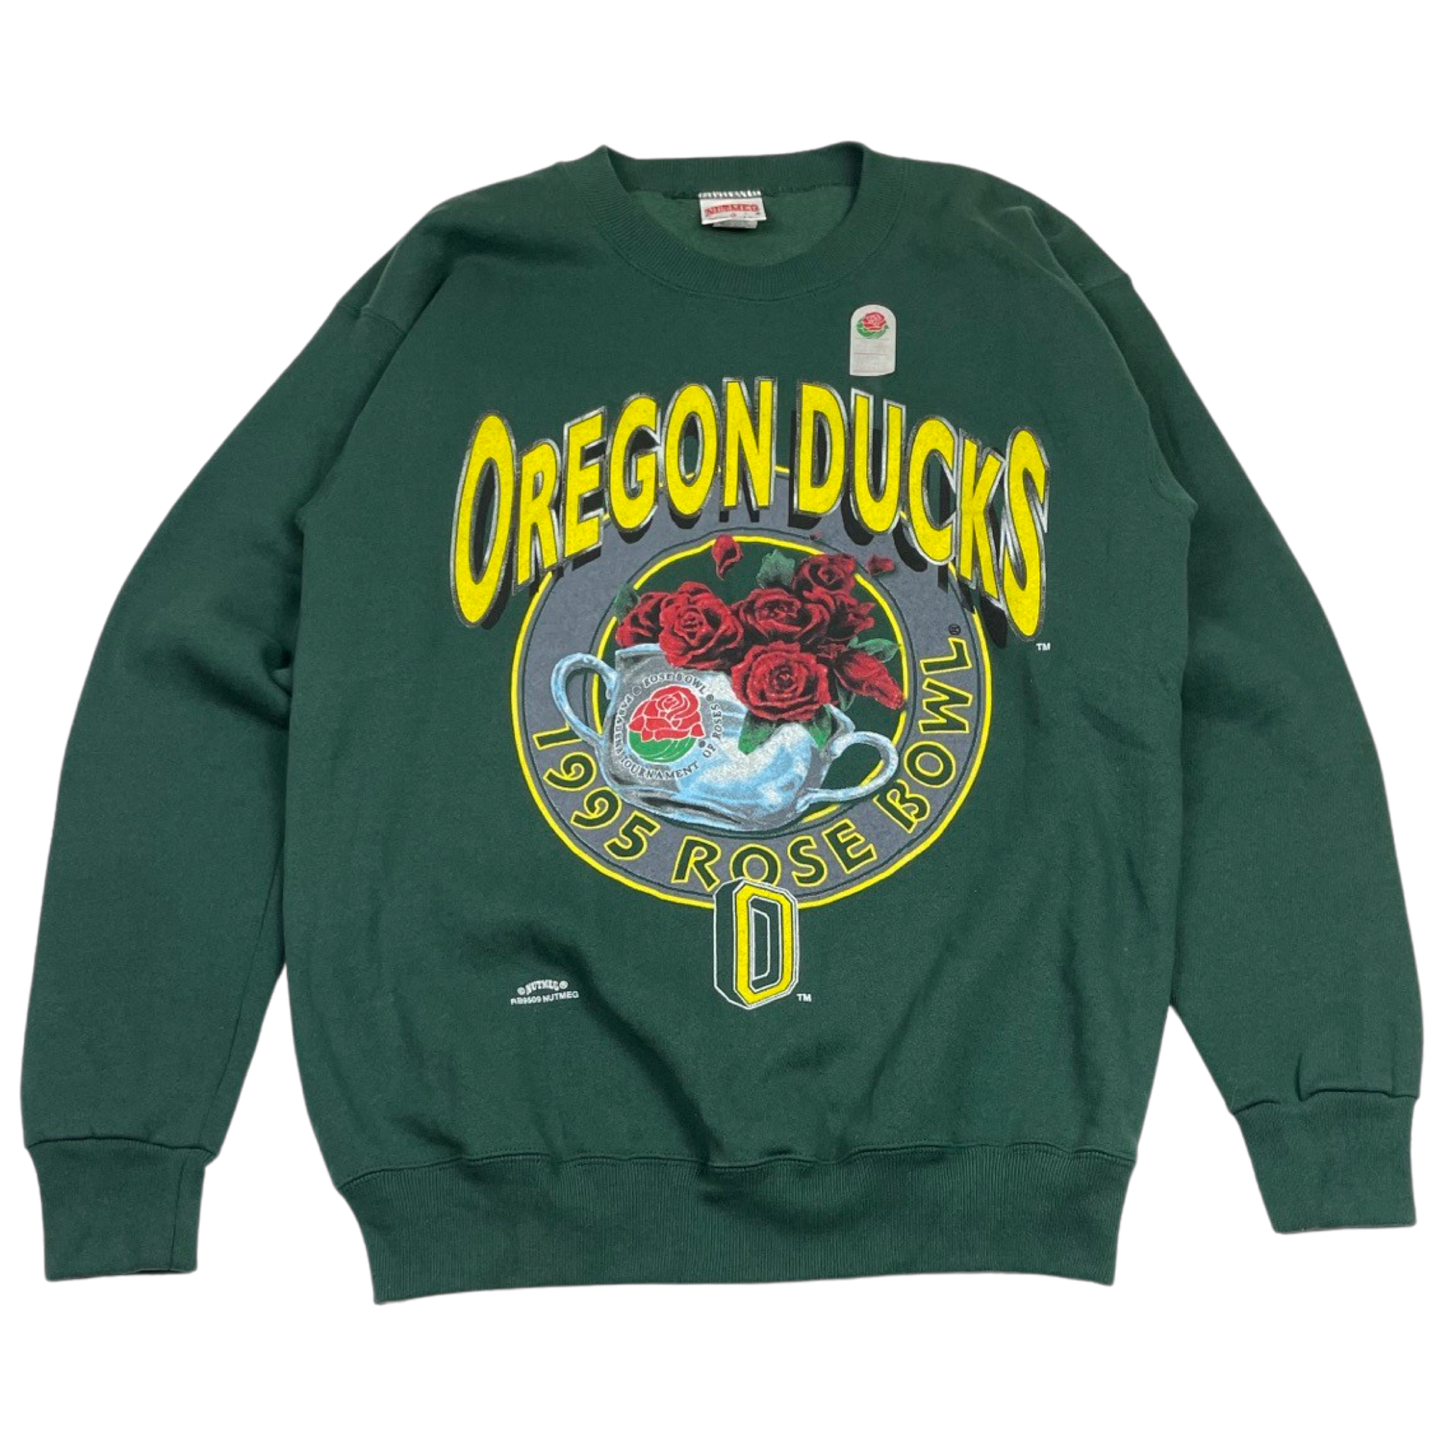 '95 Oregon Ducks Rose Bowl Crewneck *New*